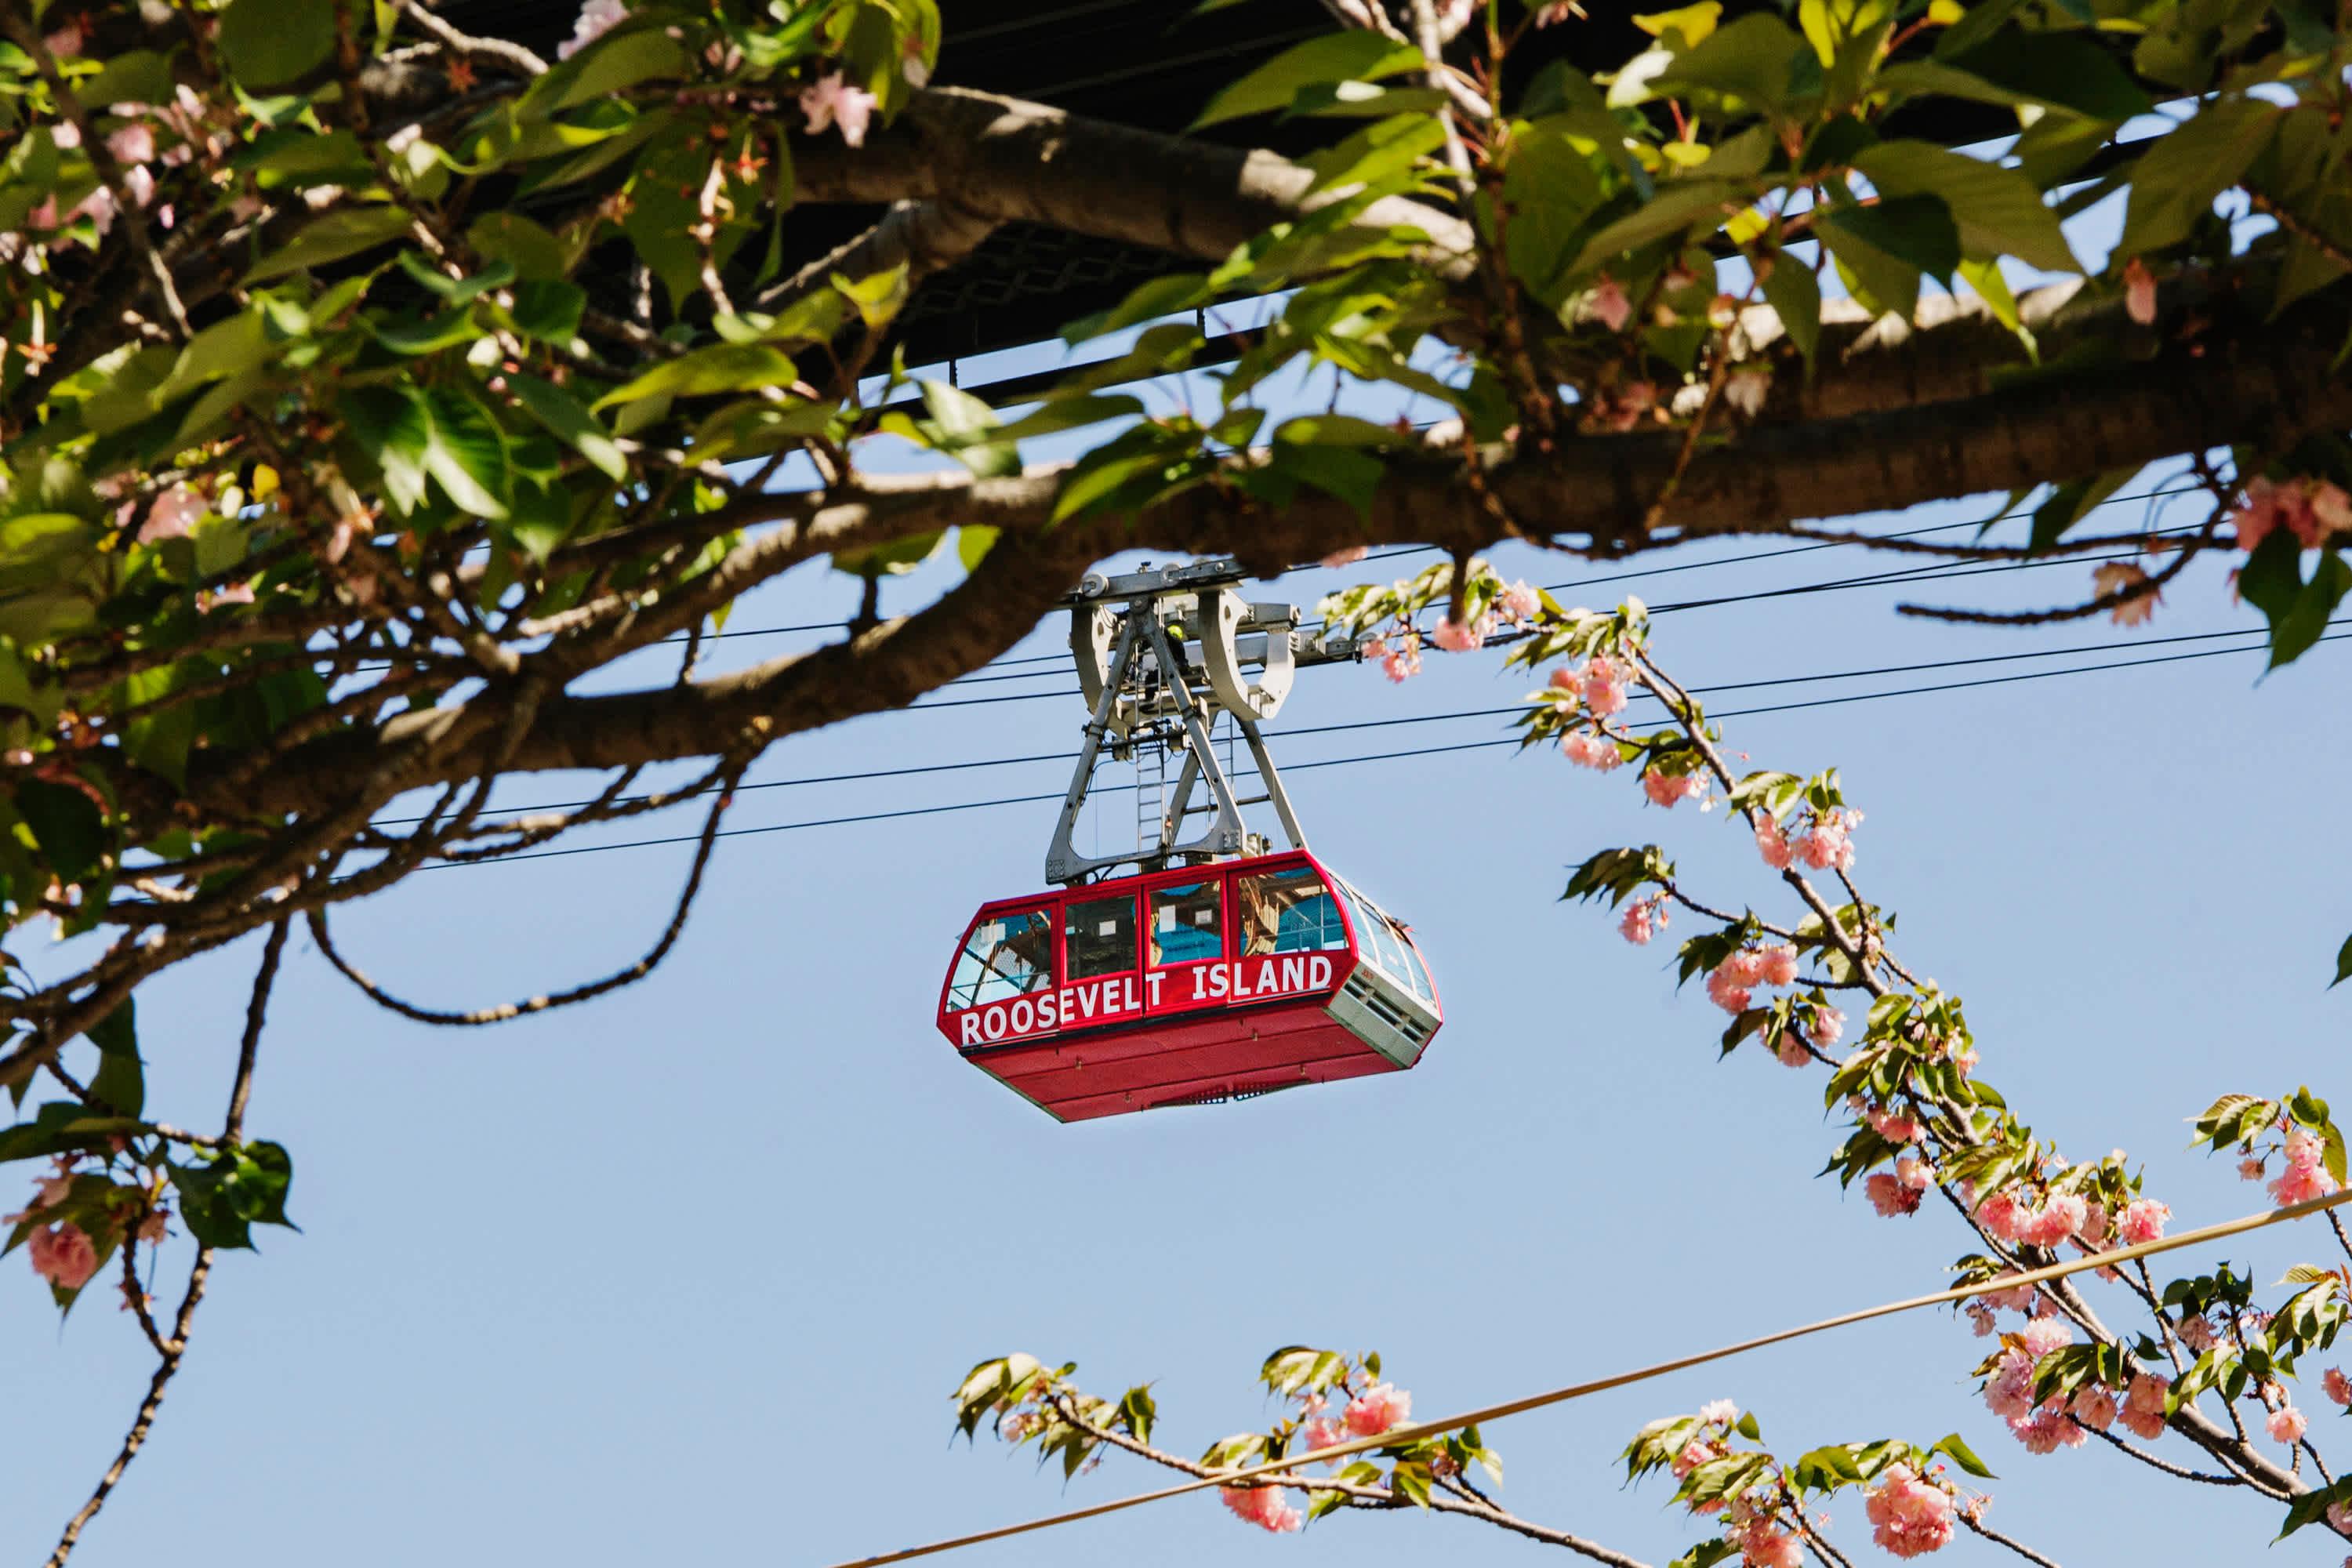 Roosevelt Island Tram on Roosevelt Island against some Cherry Blossoms